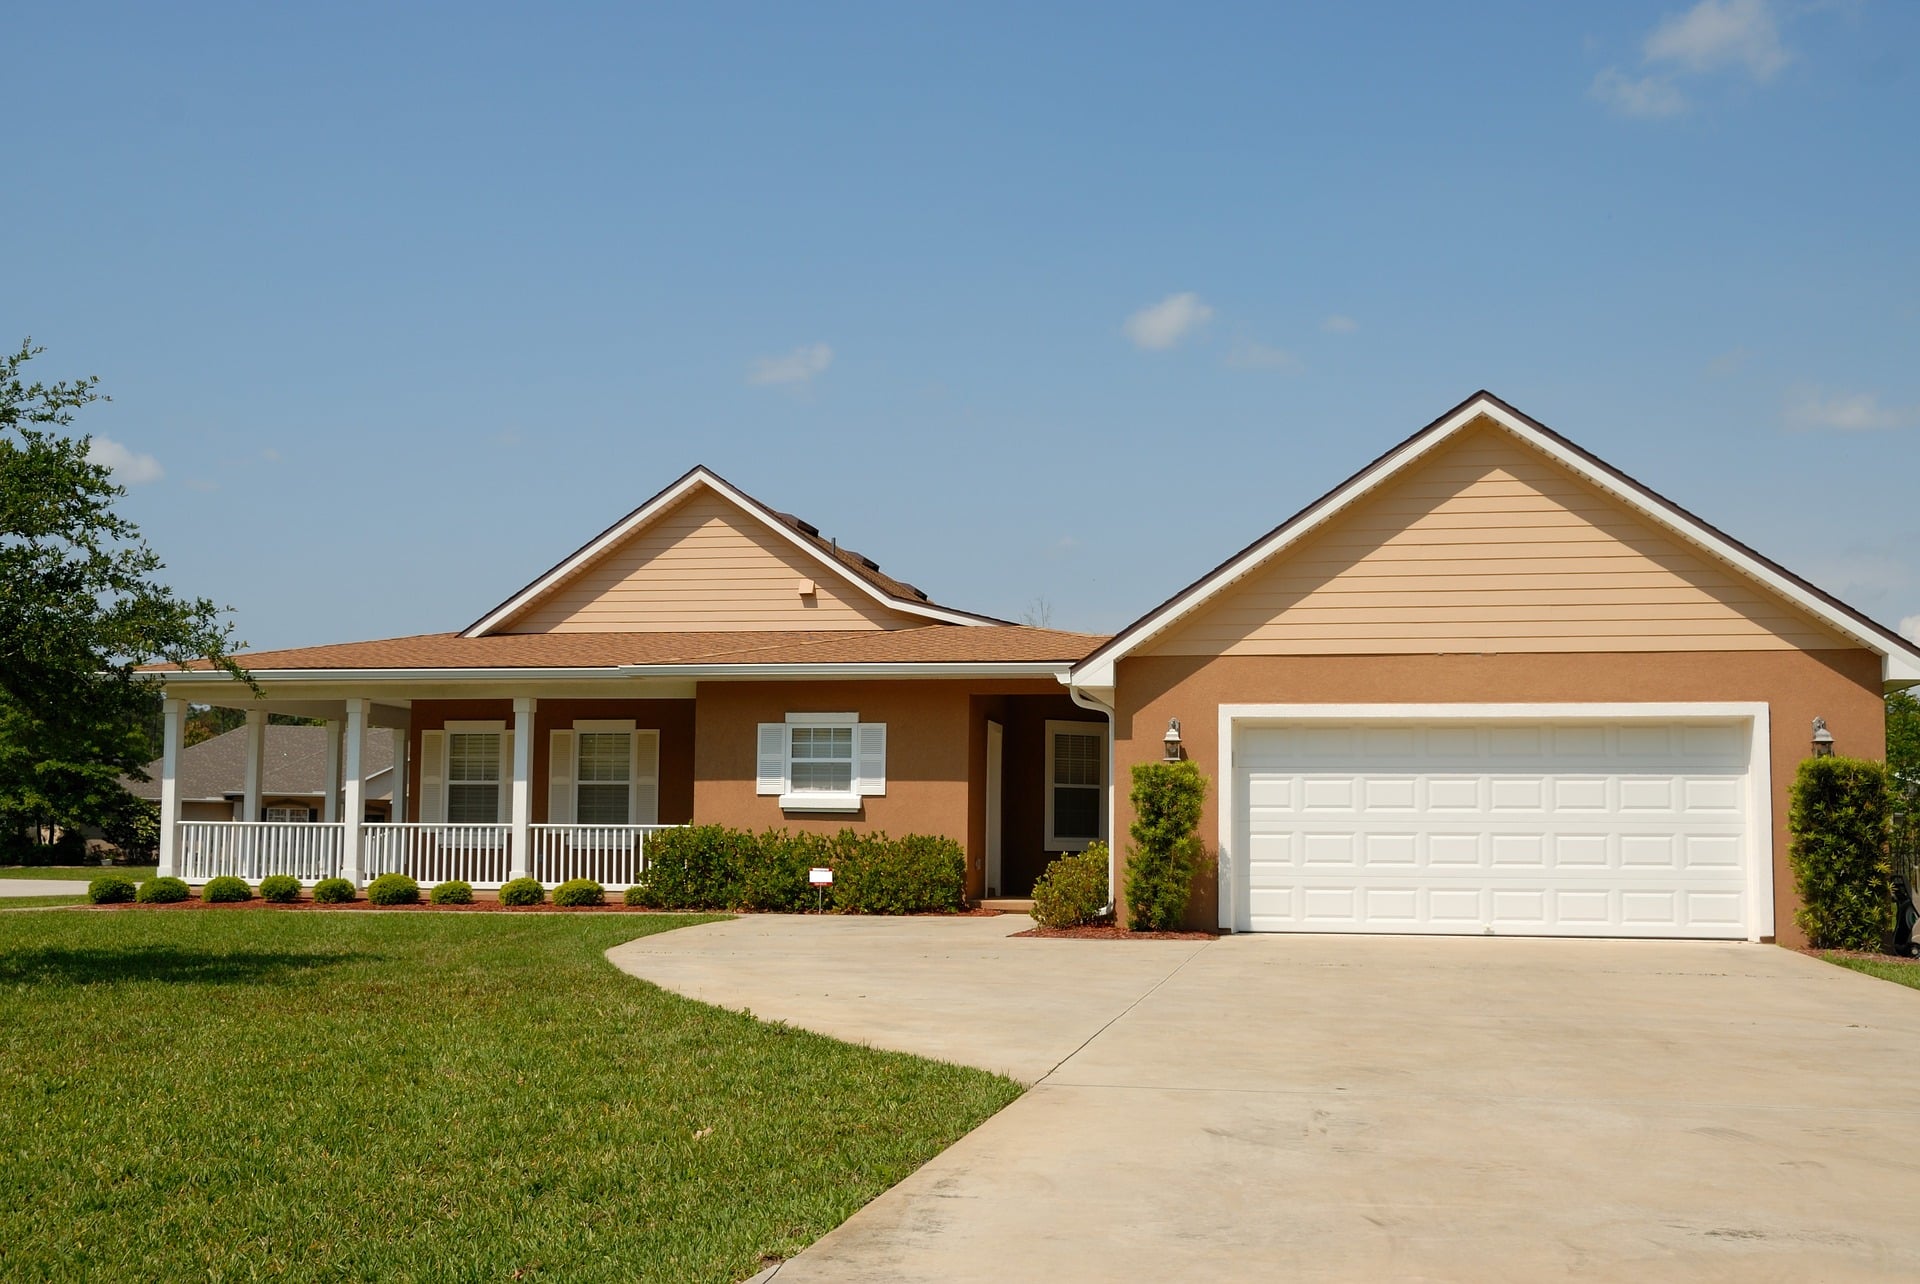 Bad Credit Home Loan Options - Associates Home Loan of Florida ...